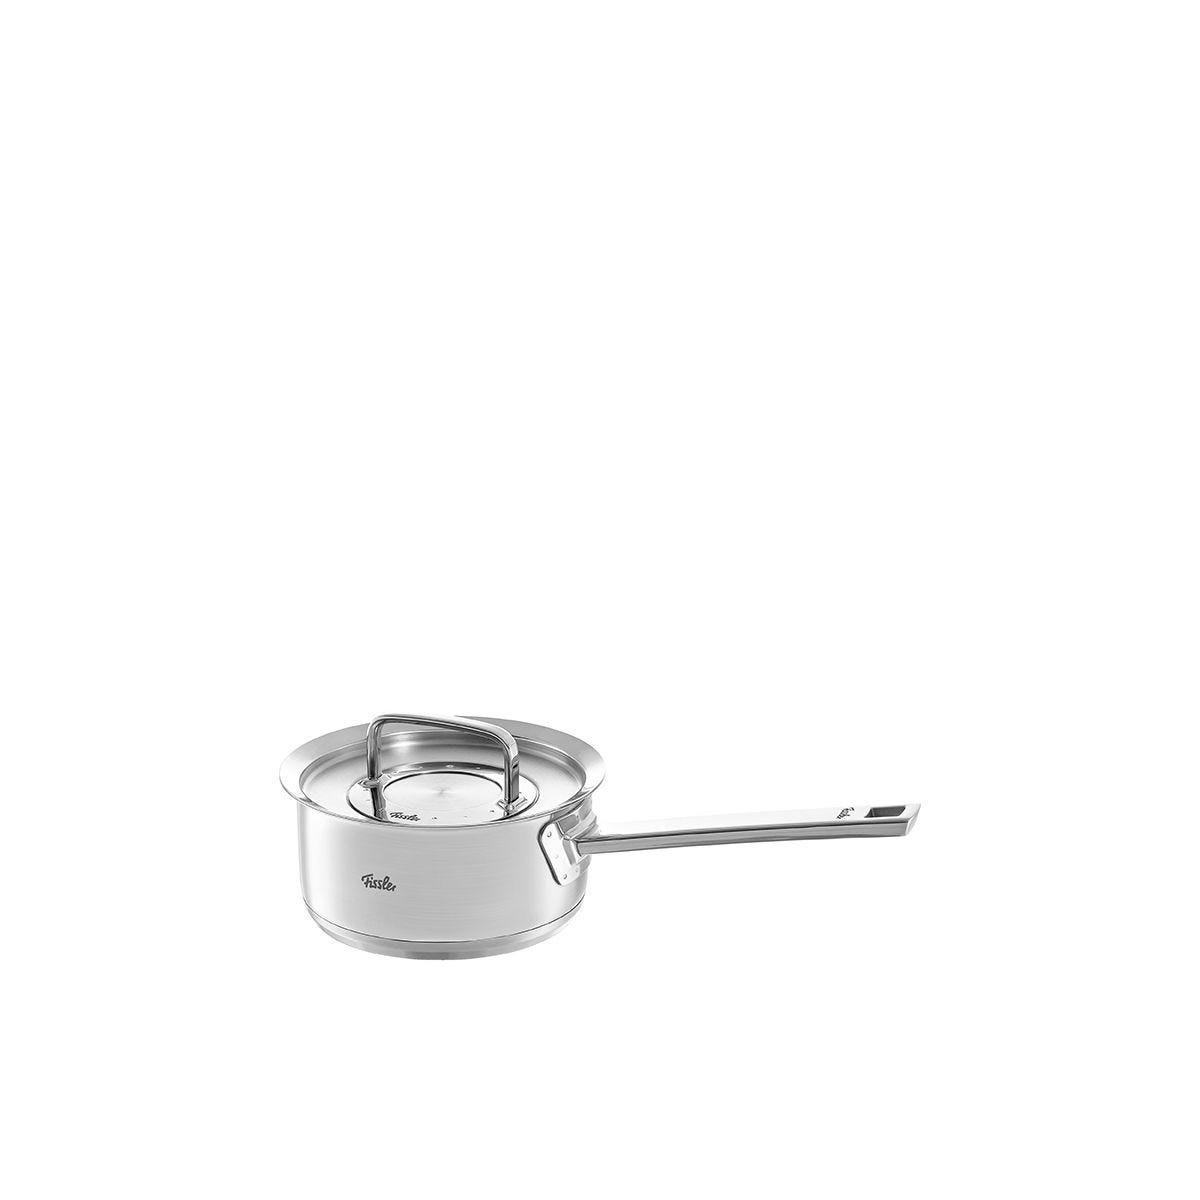 Original-Profi Collection® Stainless Steel Saucepan with Lid, 1.5 Quart 